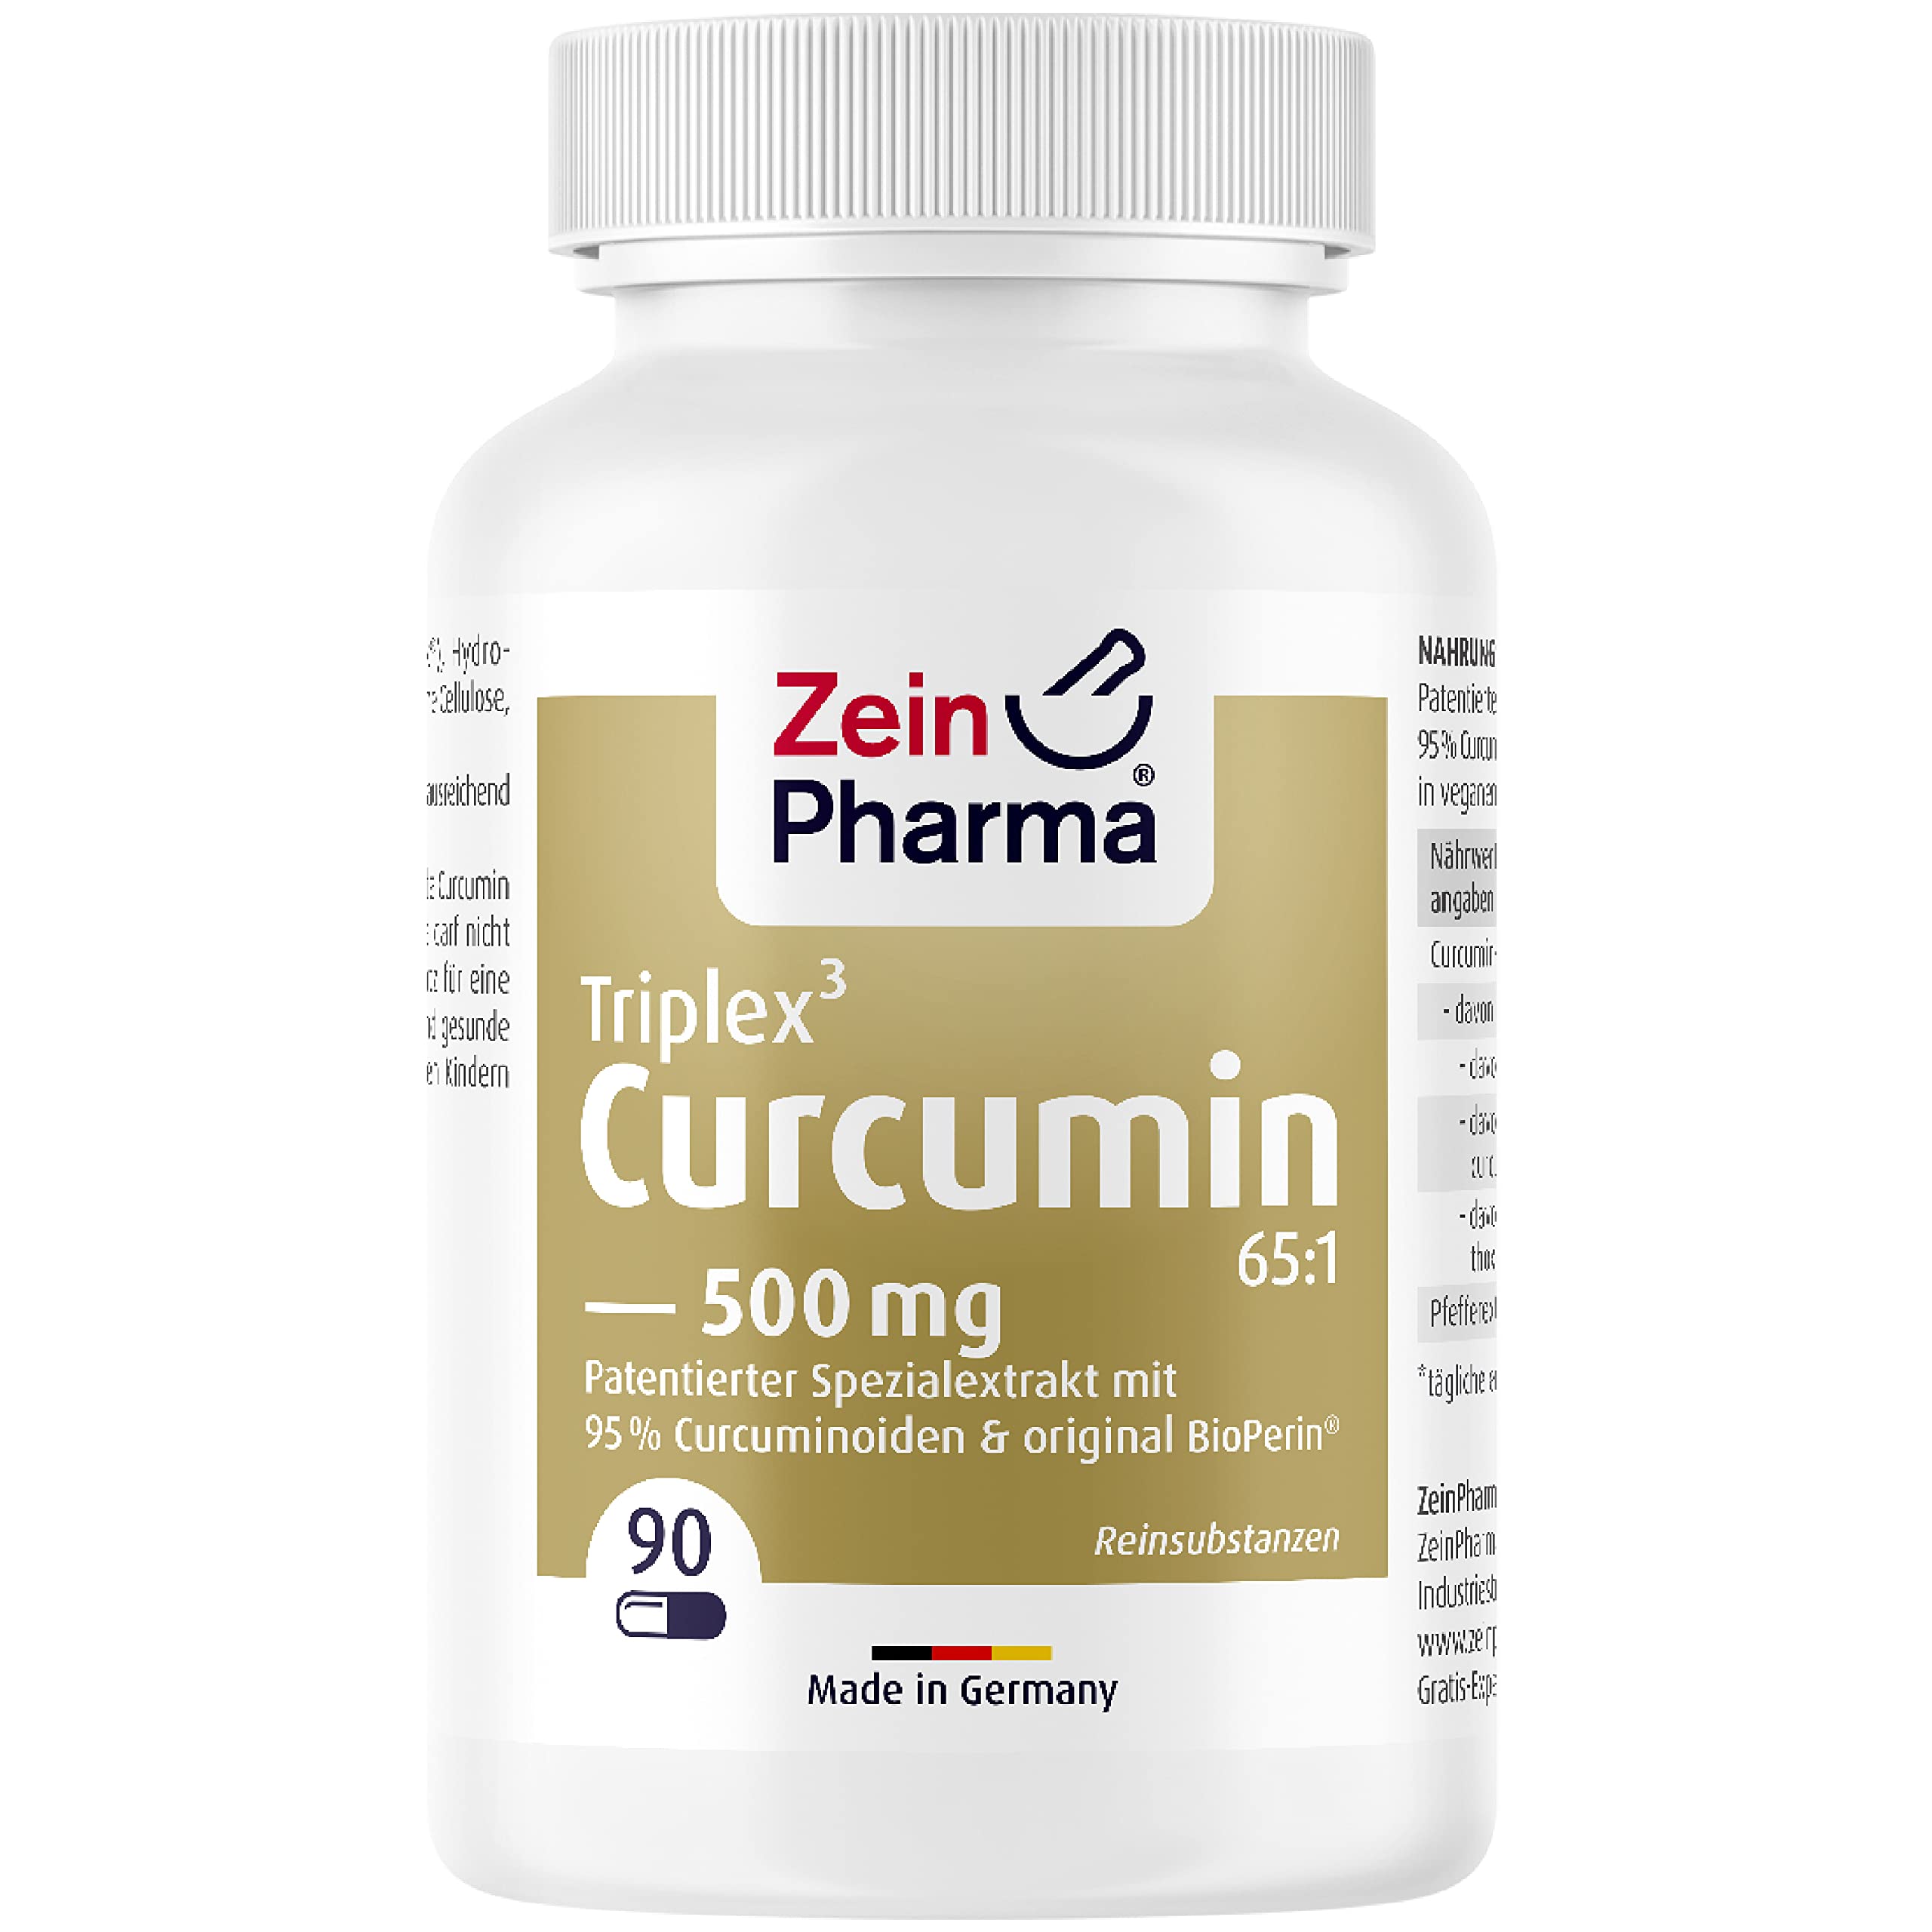 ZeinPharma Curcumin-Triplex³ Kapseln 90 Kapseln 500mg - Curcuma Piperin Kapseln hochdosiert mit 95% Extrakt, Nahrungsergänzungsmittel vegan, laborgeprüft